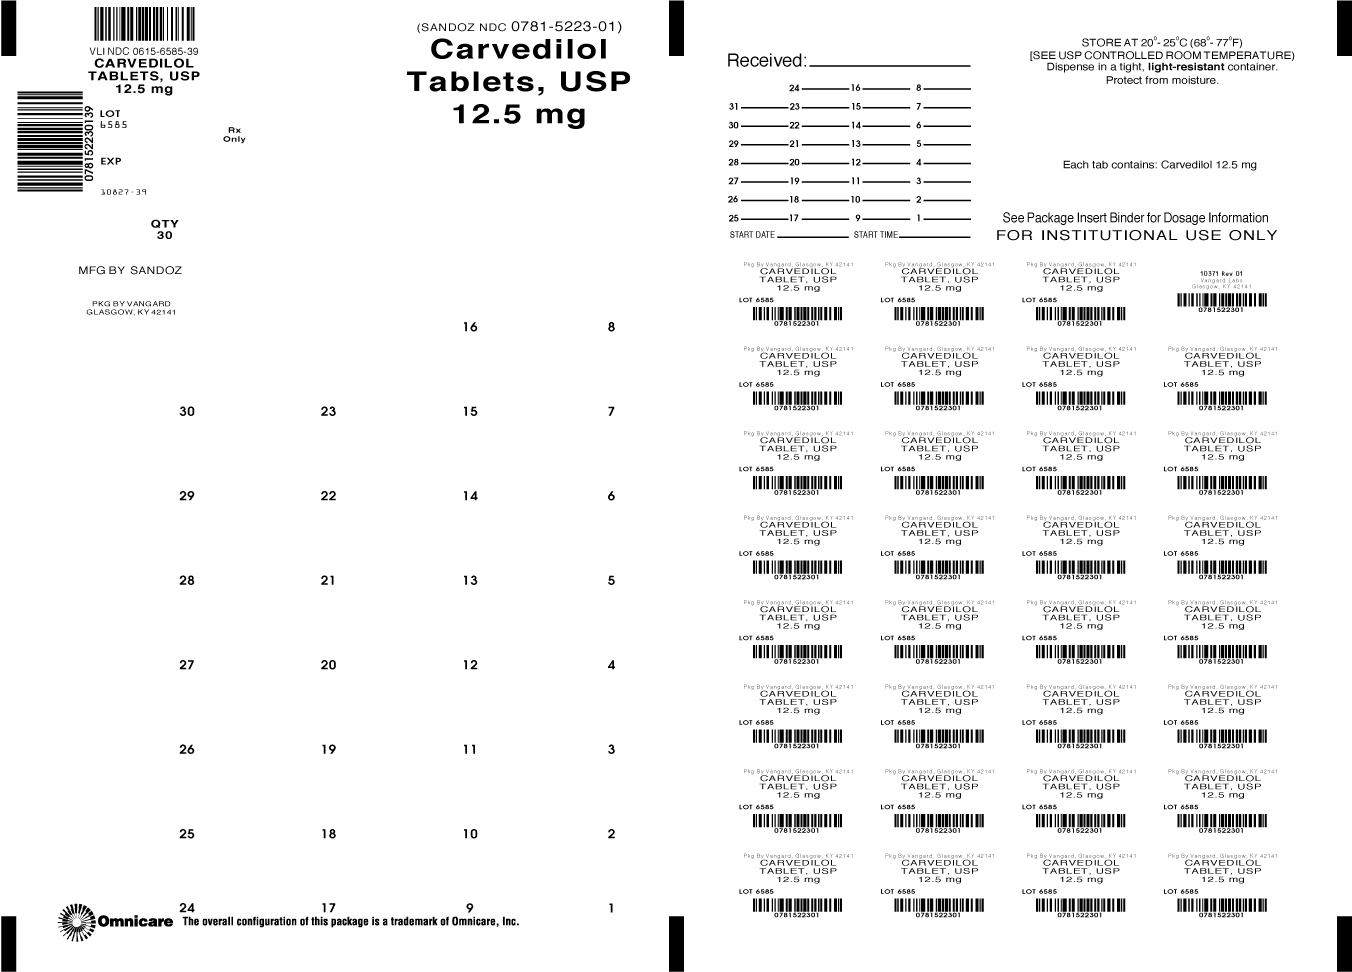 Carvedilol Tablets, USP 12.5mg